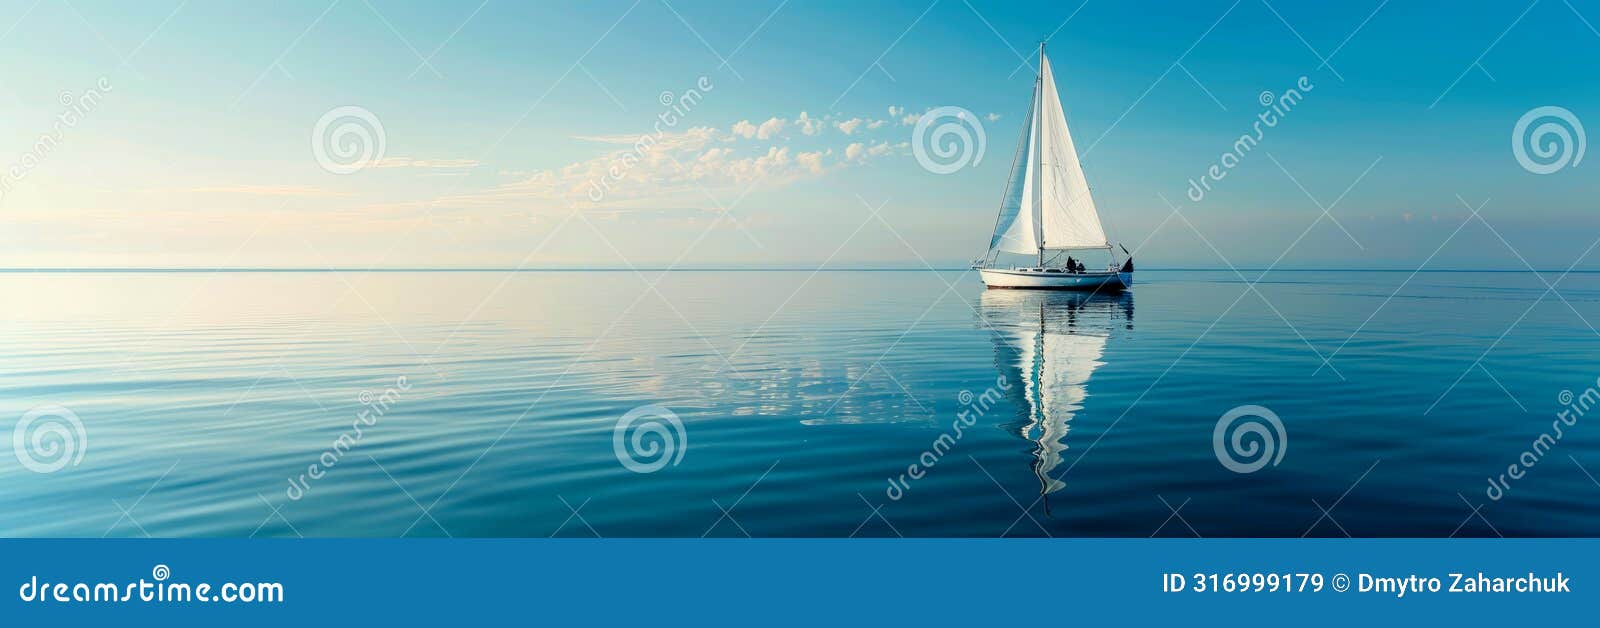 sailing boat on a calm sea, white sails, summer adventure, nautical lifestyle, endless horizons